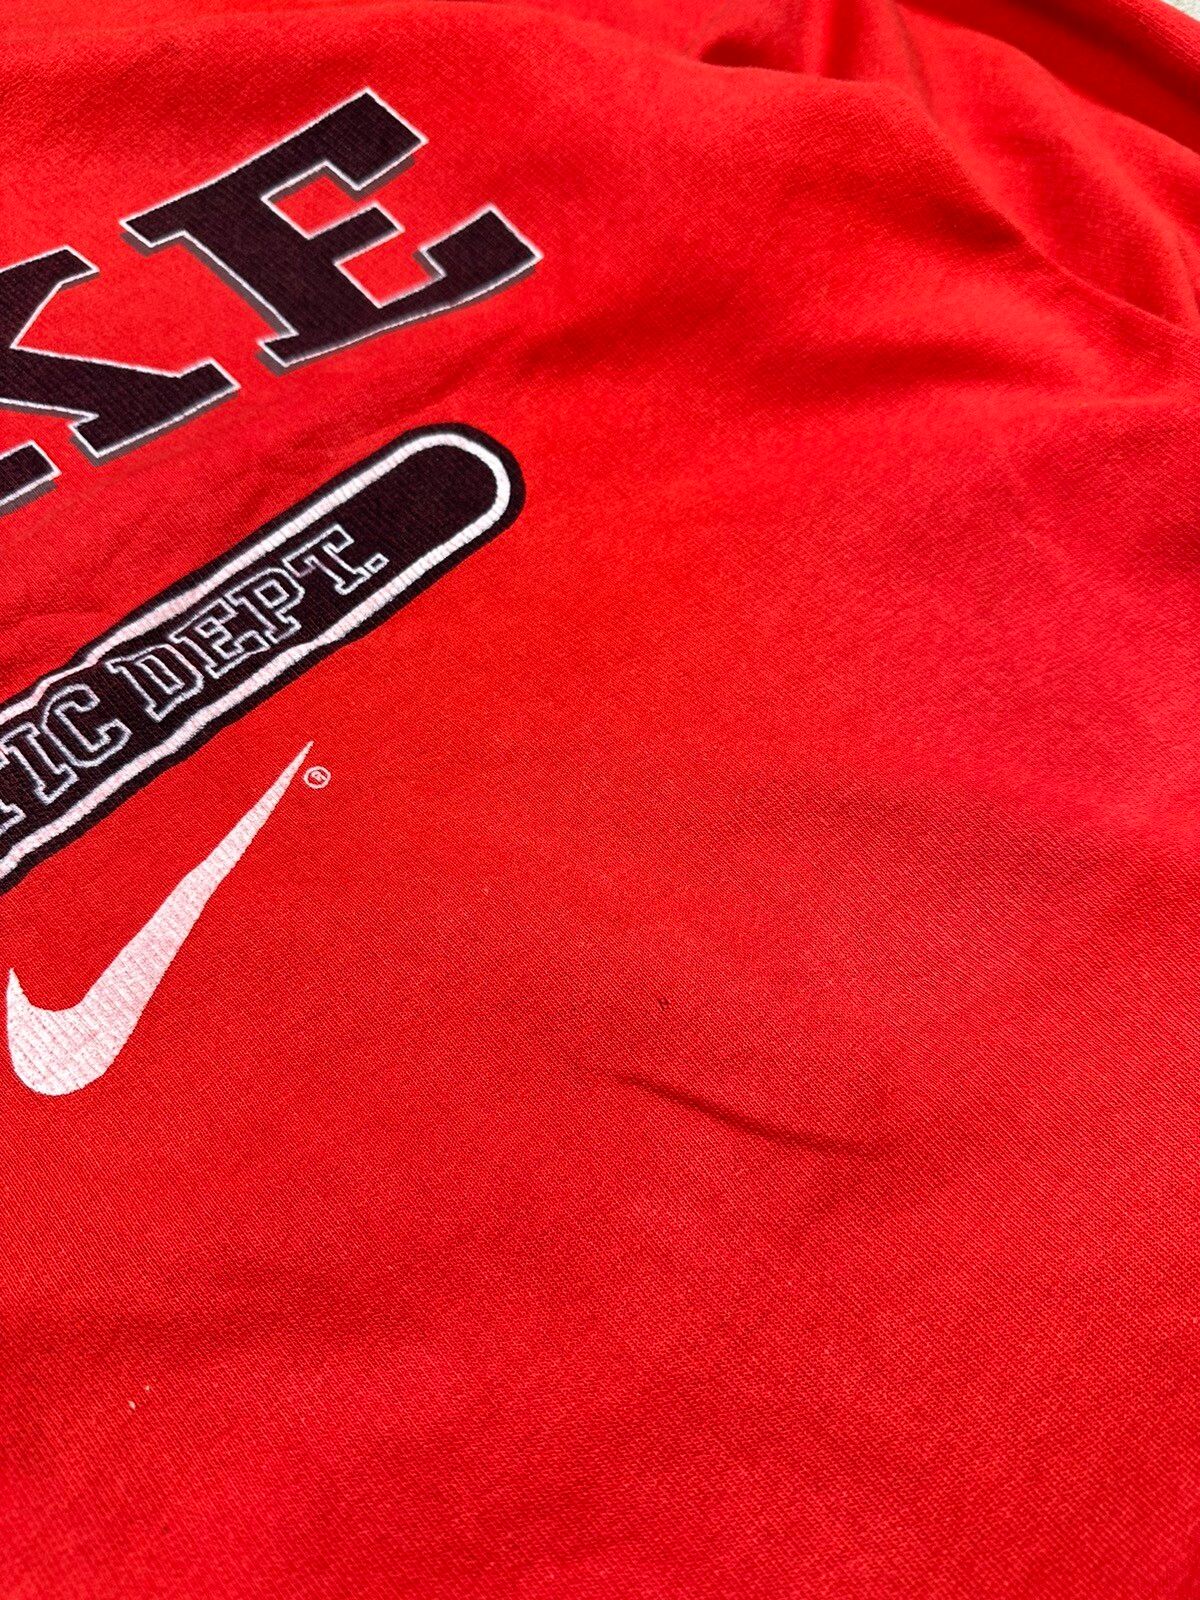 Nike ‼️ Vintage 90s Nike Duke Red Trashed Crewneck Bootleg Size US L / EU 52-54 / 3 - 4 Thumbnail